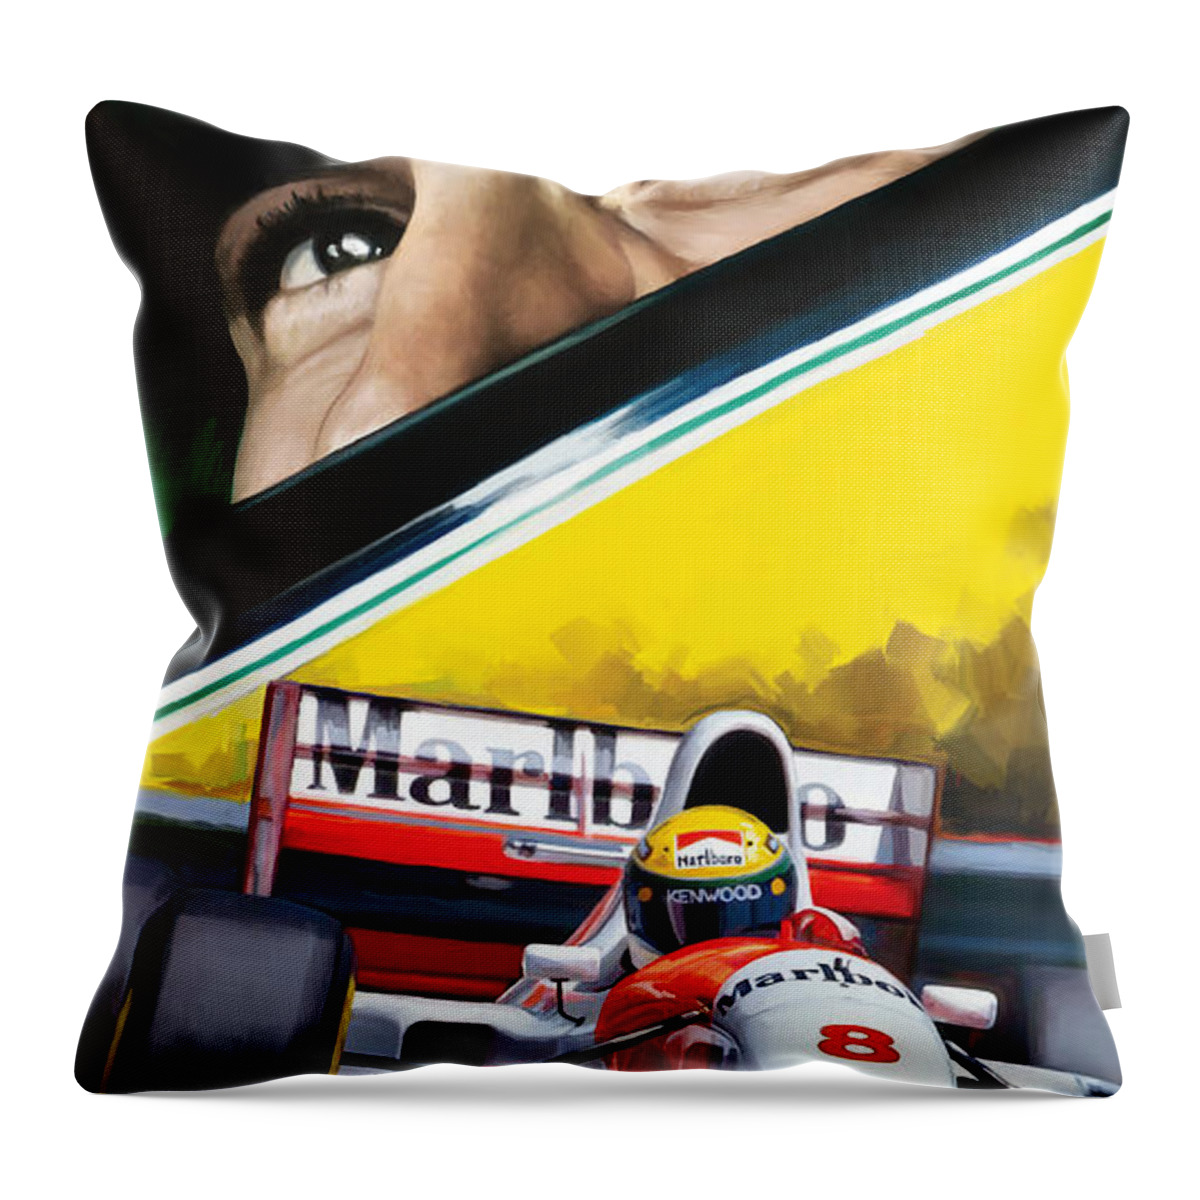 Ayrton Senna Throw Pillow featuring the painting Ayrton Senna Artwork by Sheraz A